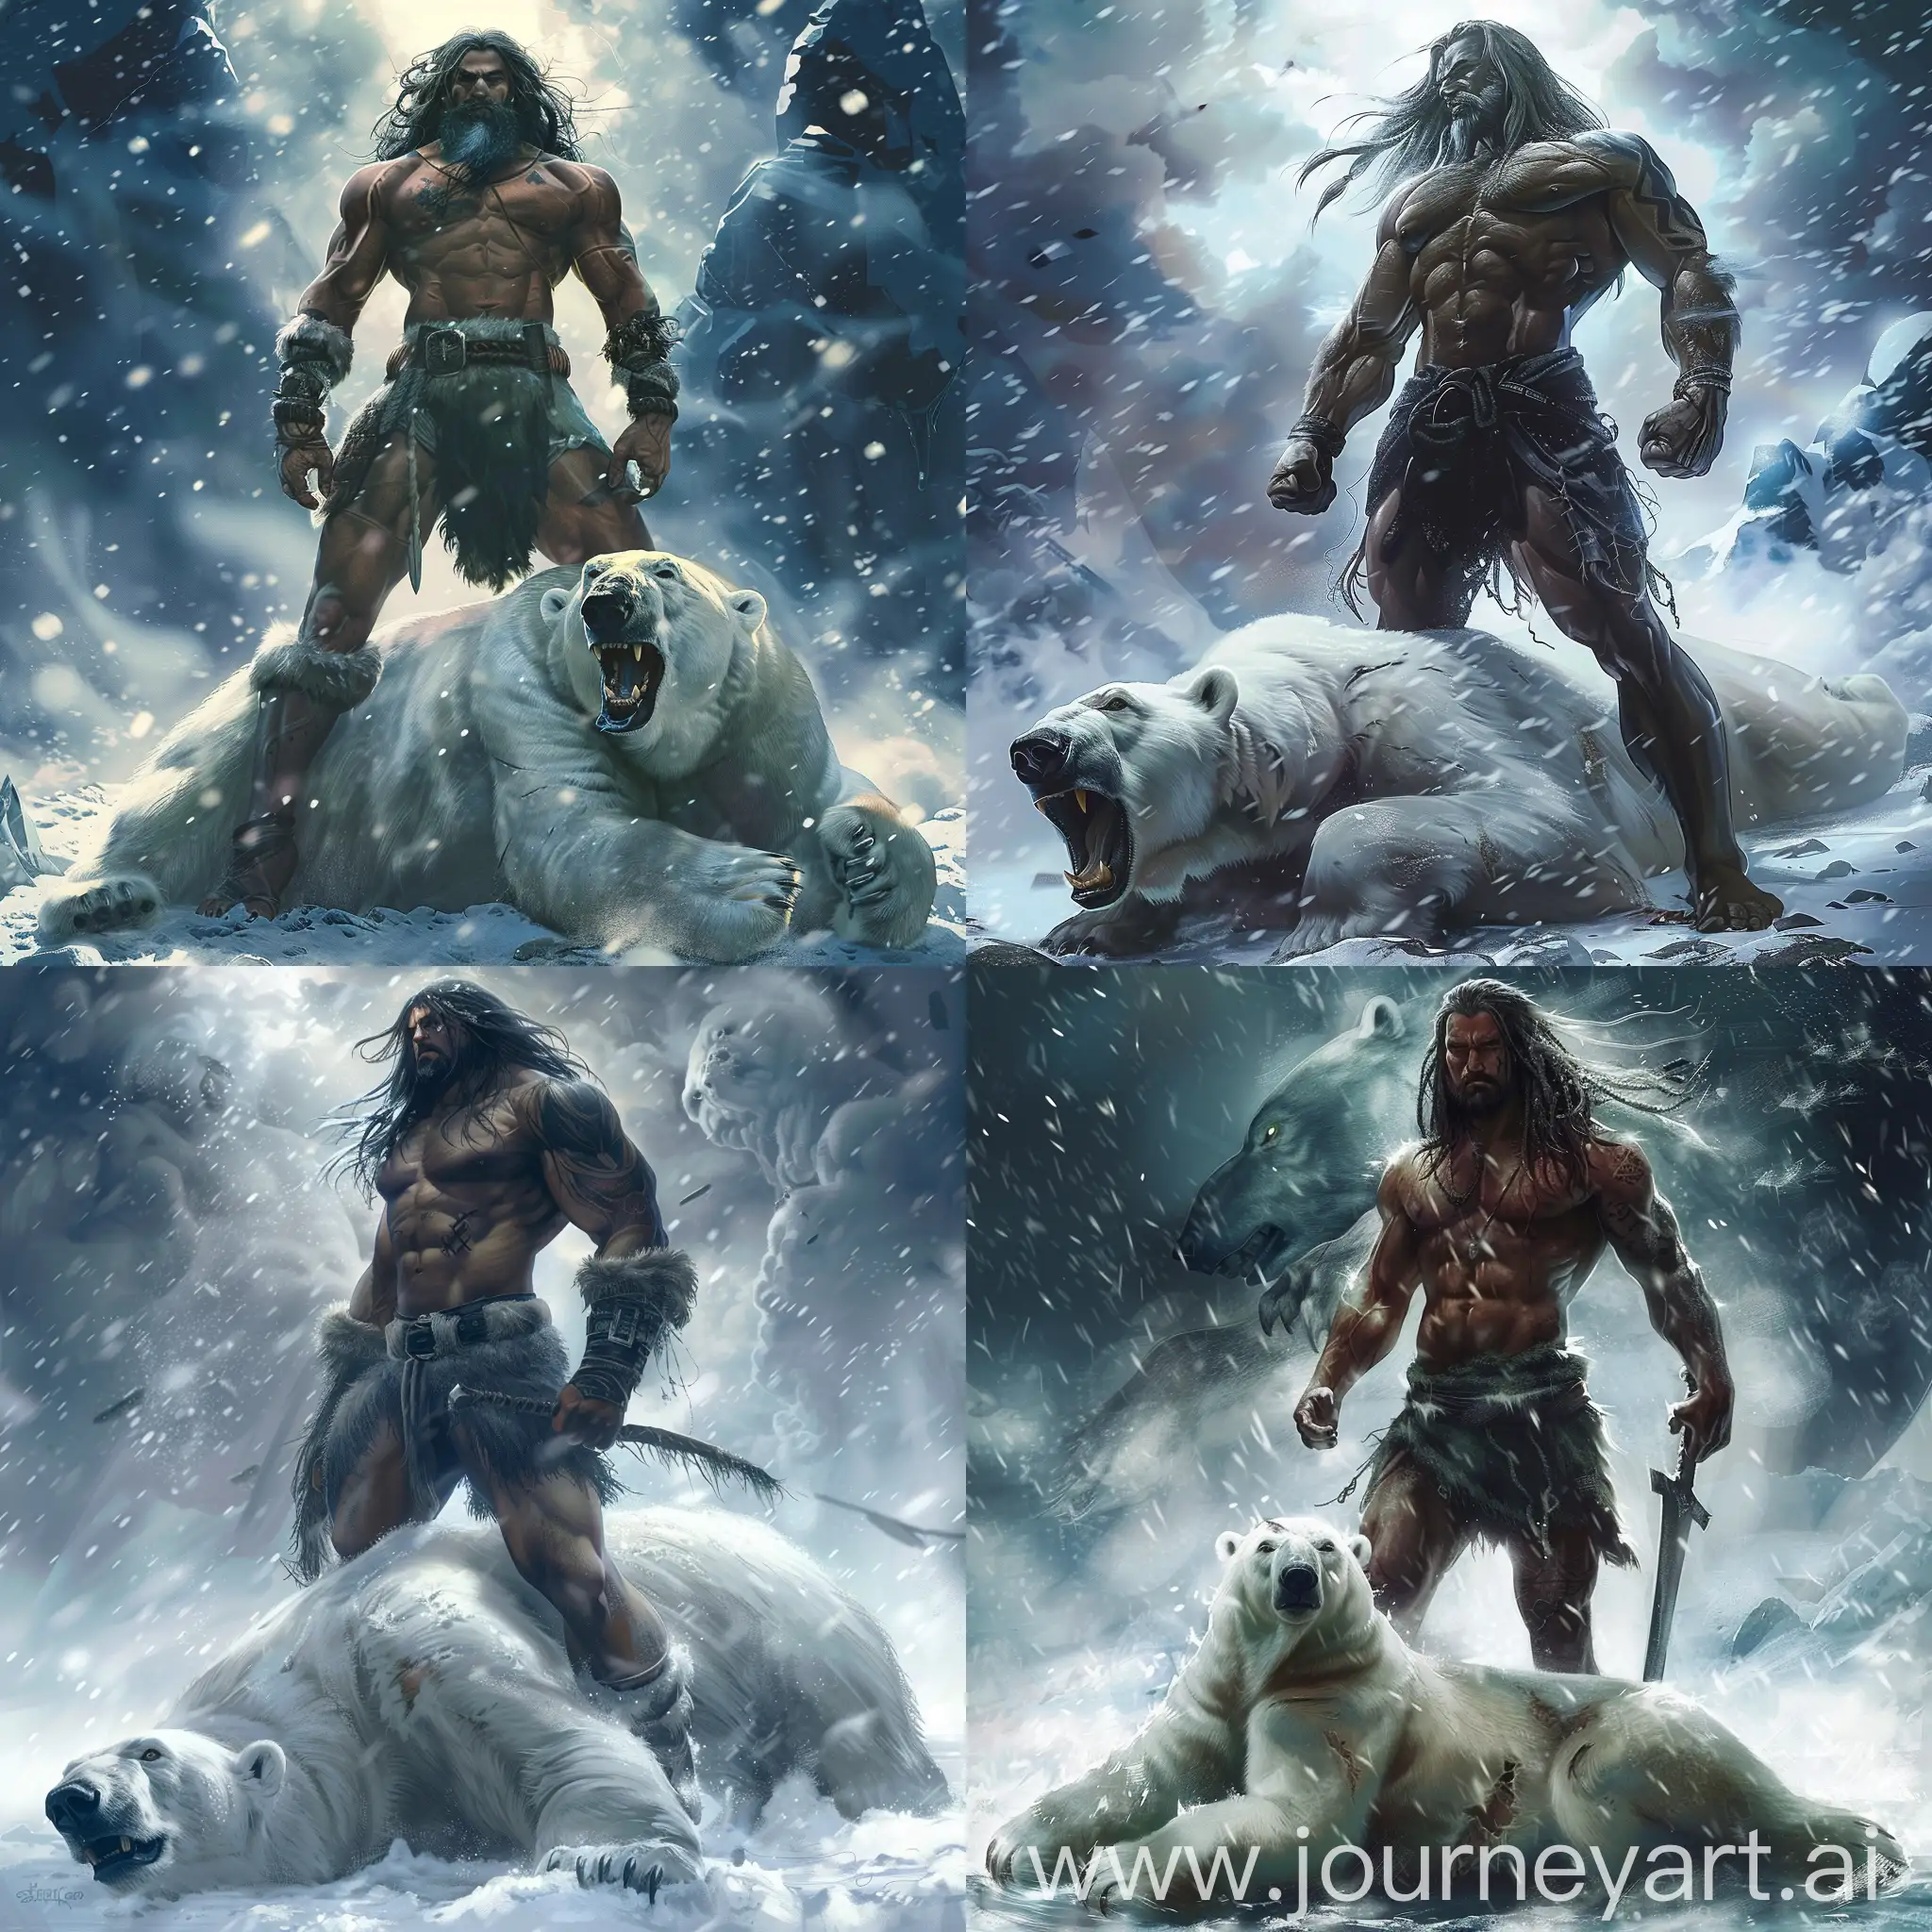 Muscular-Man-Victorious-Over-Polar-Bear-in-Anime-Snowstorm-Scene